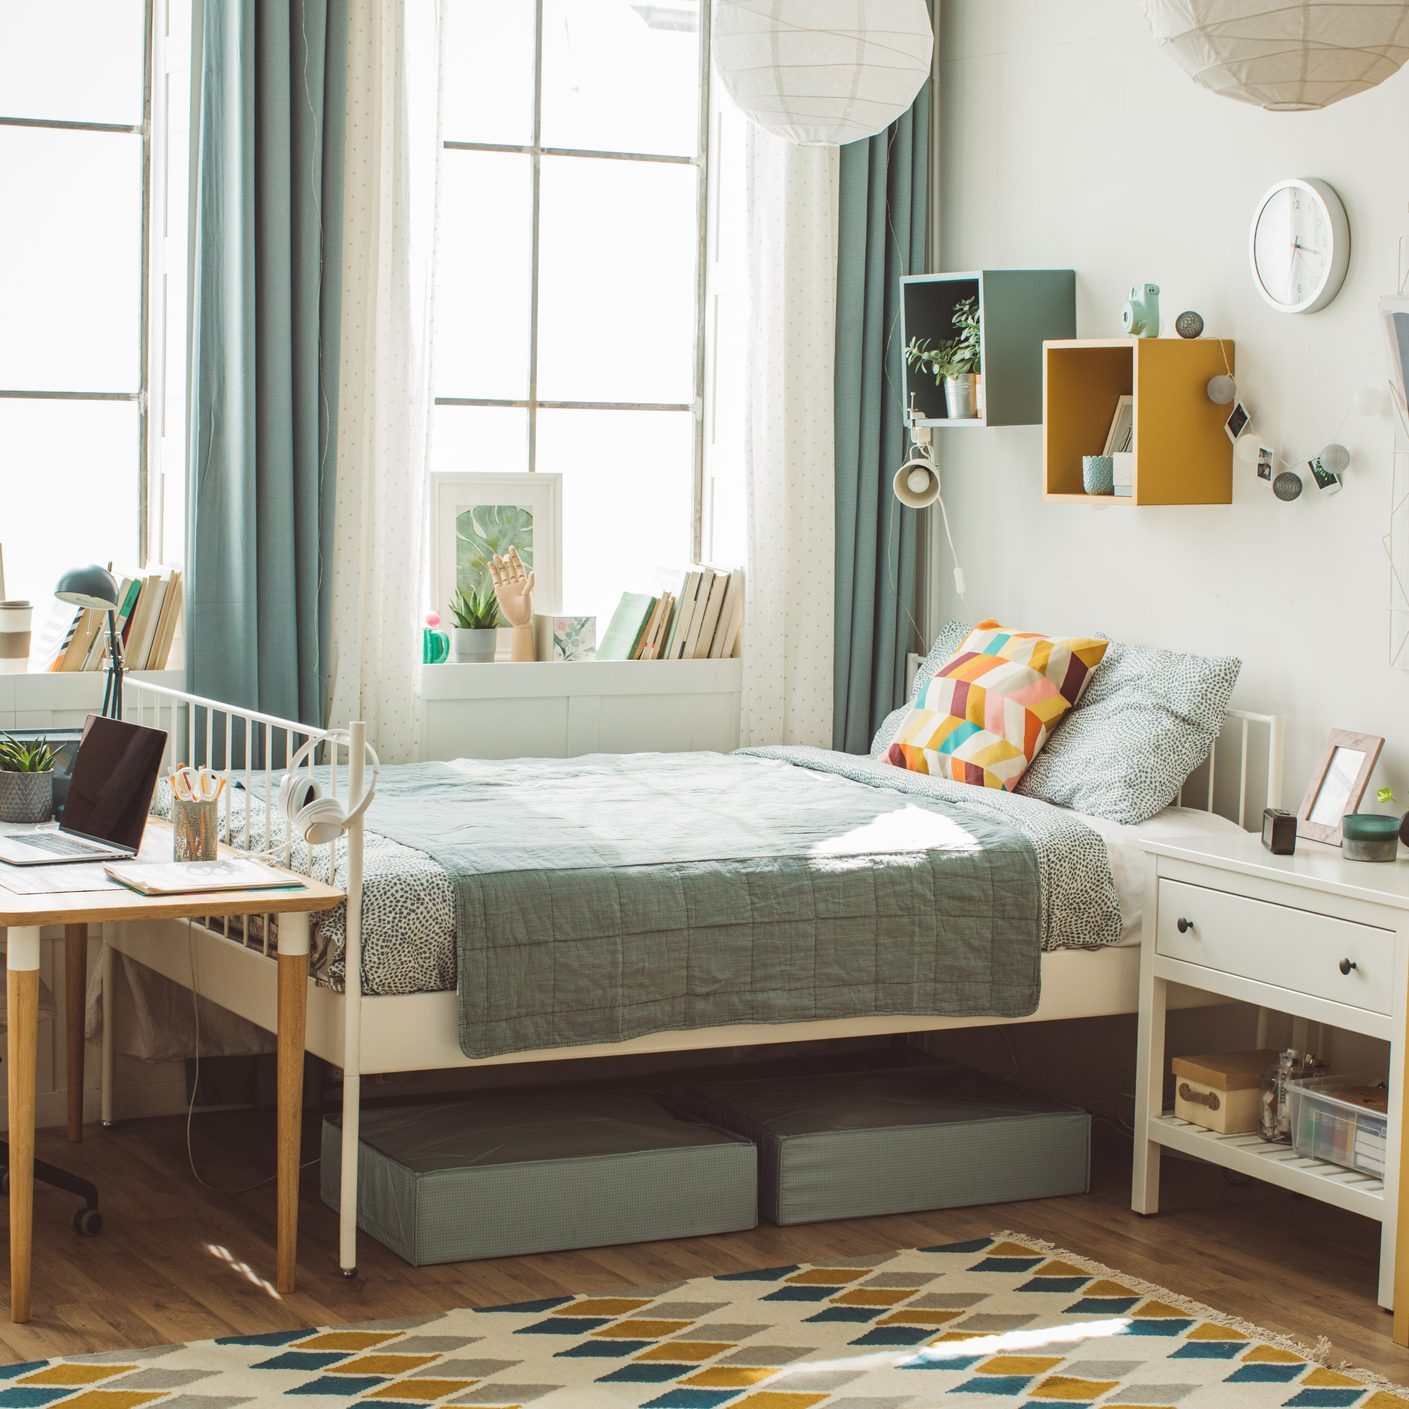 Easy DIY Dorm Room Decor Ideas You'll Love – Kitchen Stuff Plus